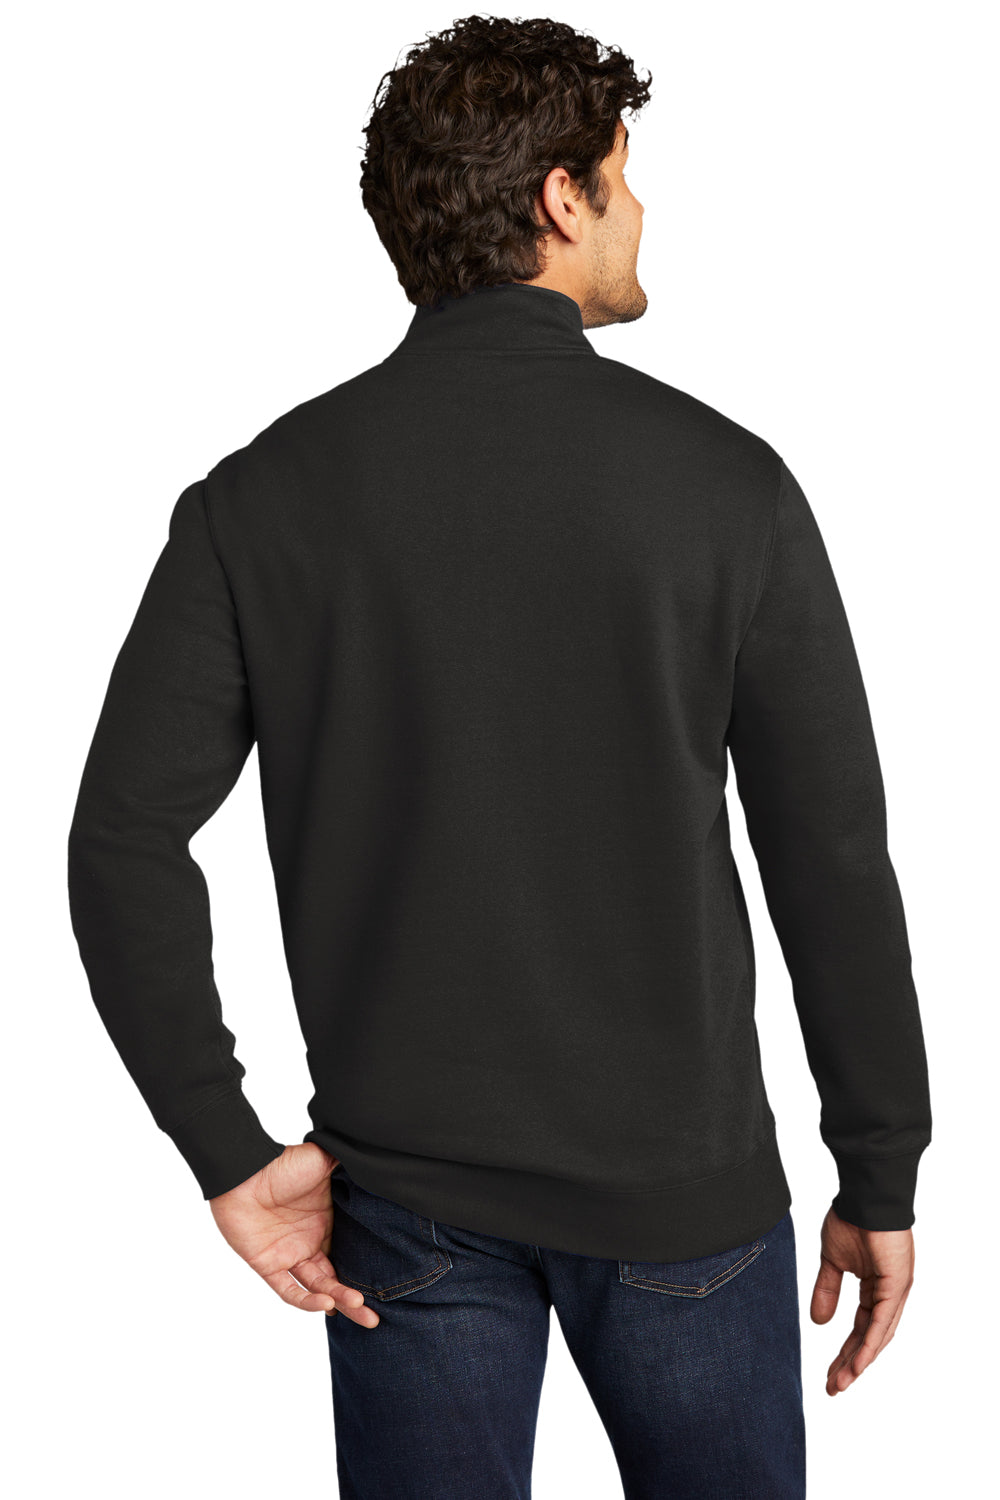 District Mens Very Important 1/4 Zip Sweatshirt Black Side